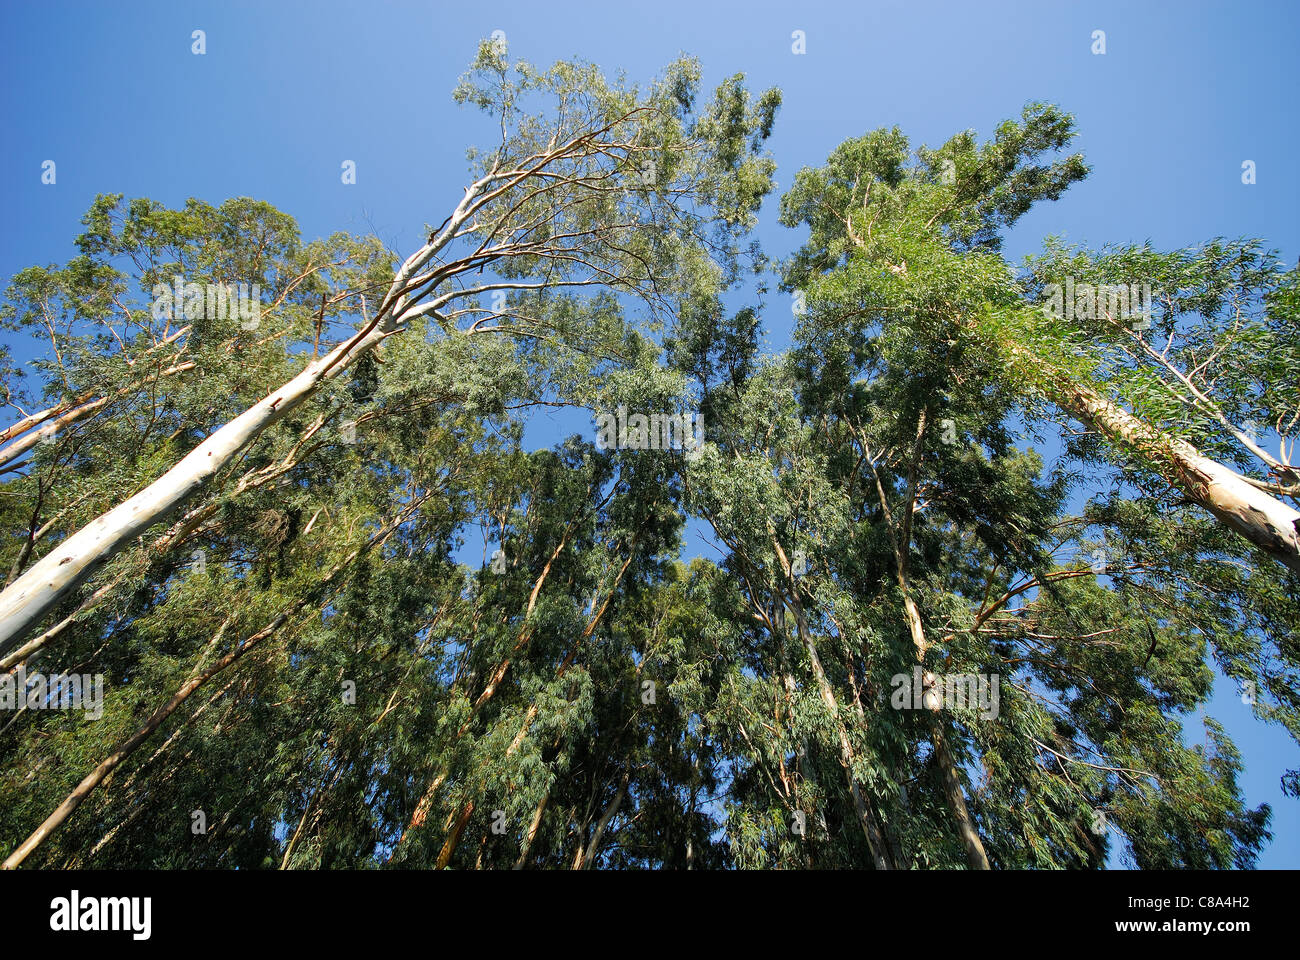 TURKEY. Eucalyptus trees Eucalyptus globulus. Stock Photo